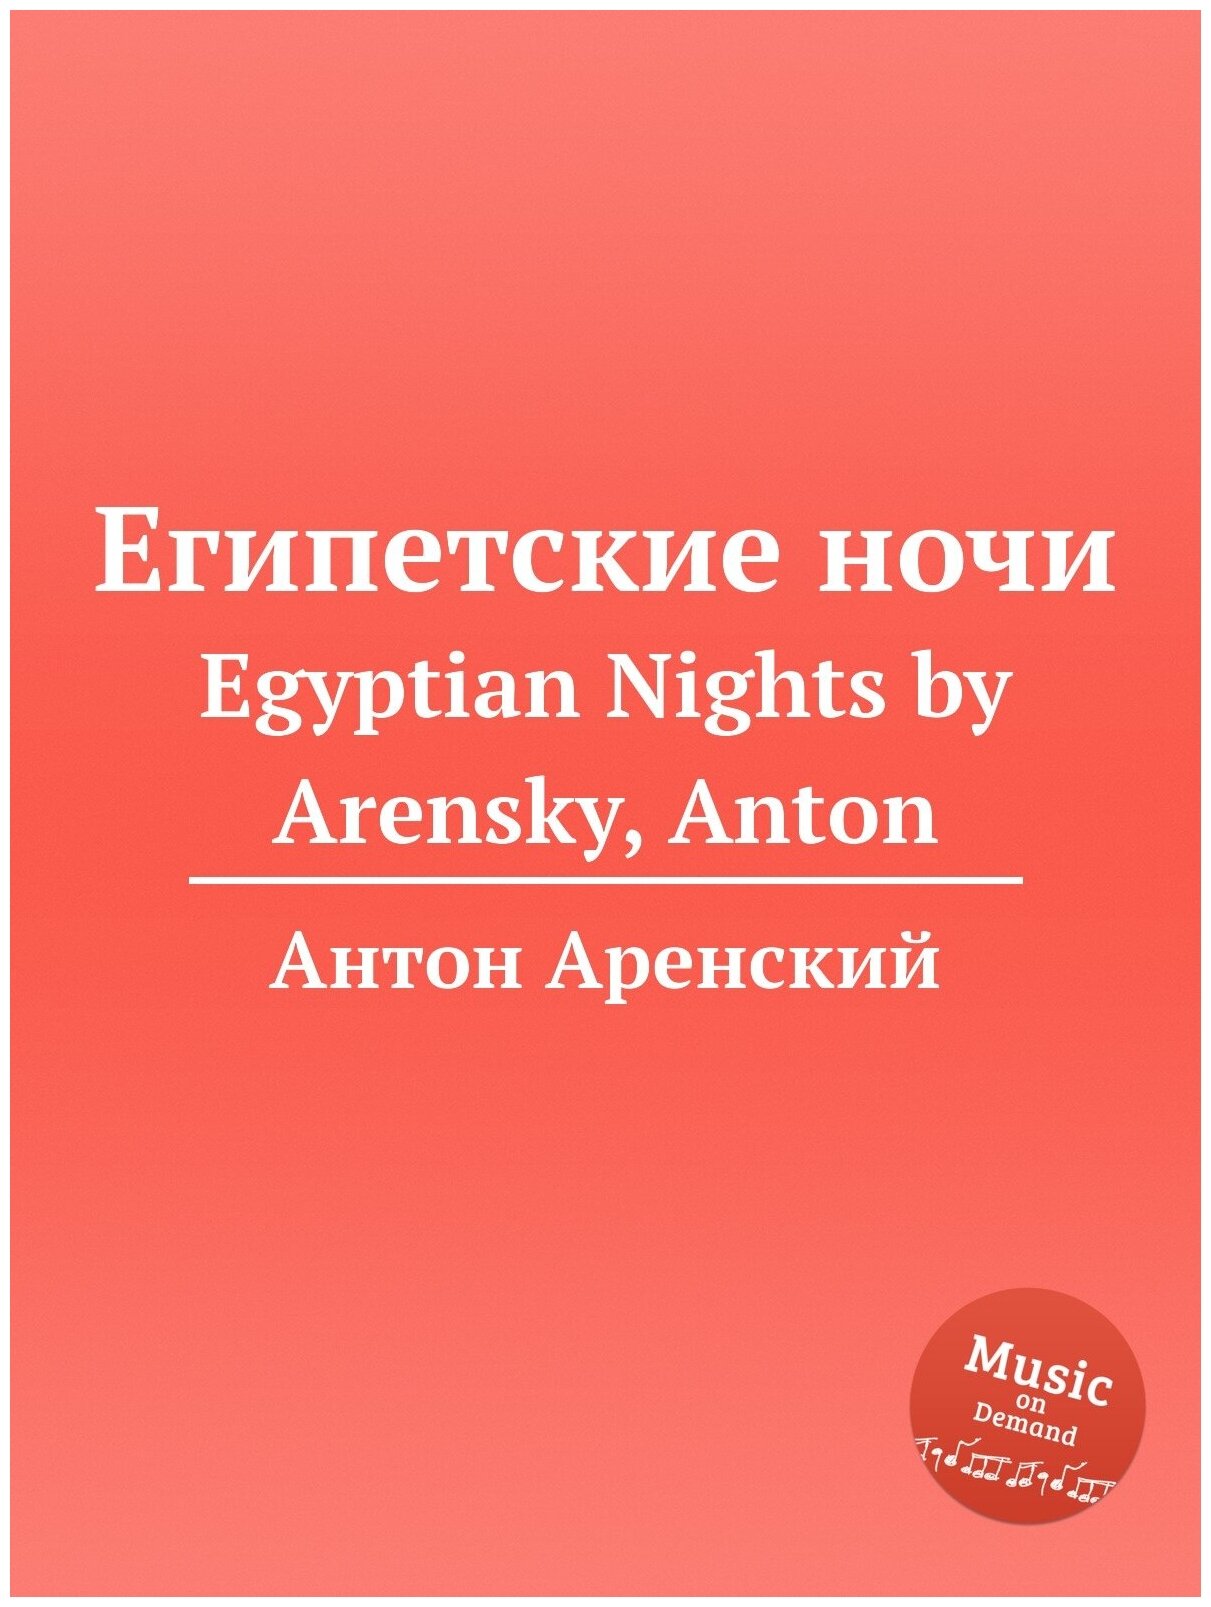 Египетские ночи. Egyptian Nights by Arensky, Anton